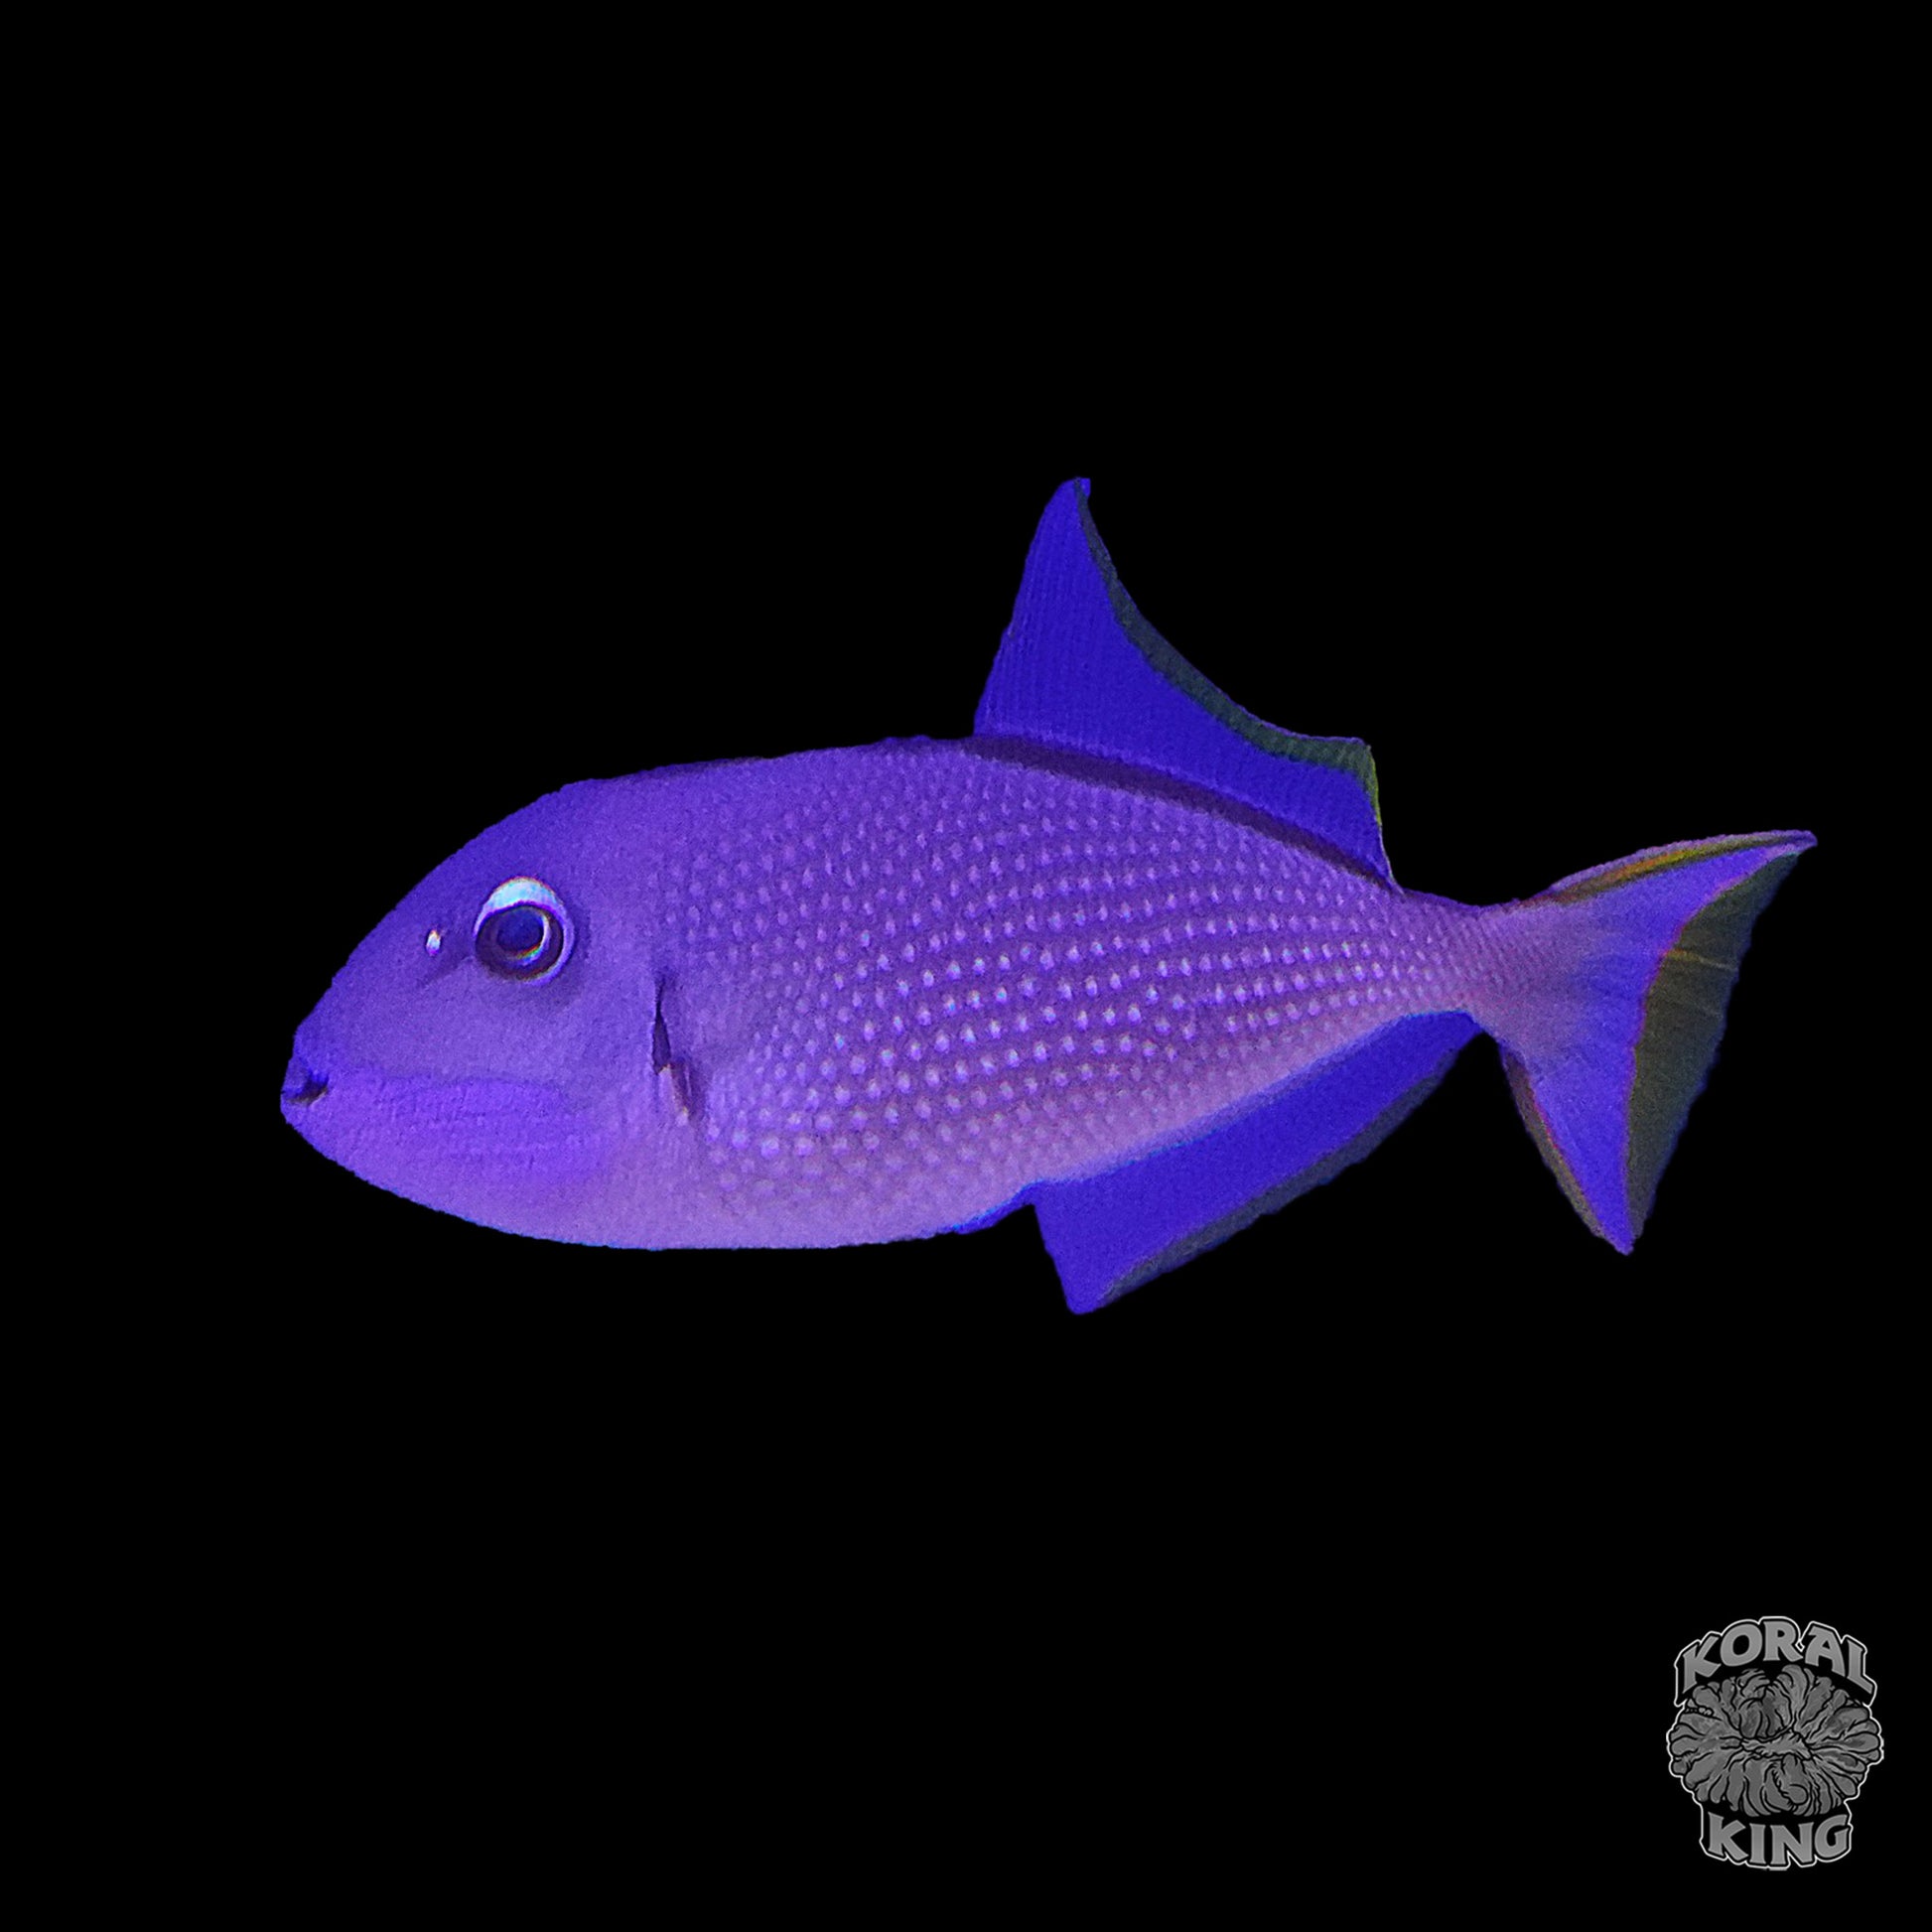 Blue Throat Triggerfish - Koral King